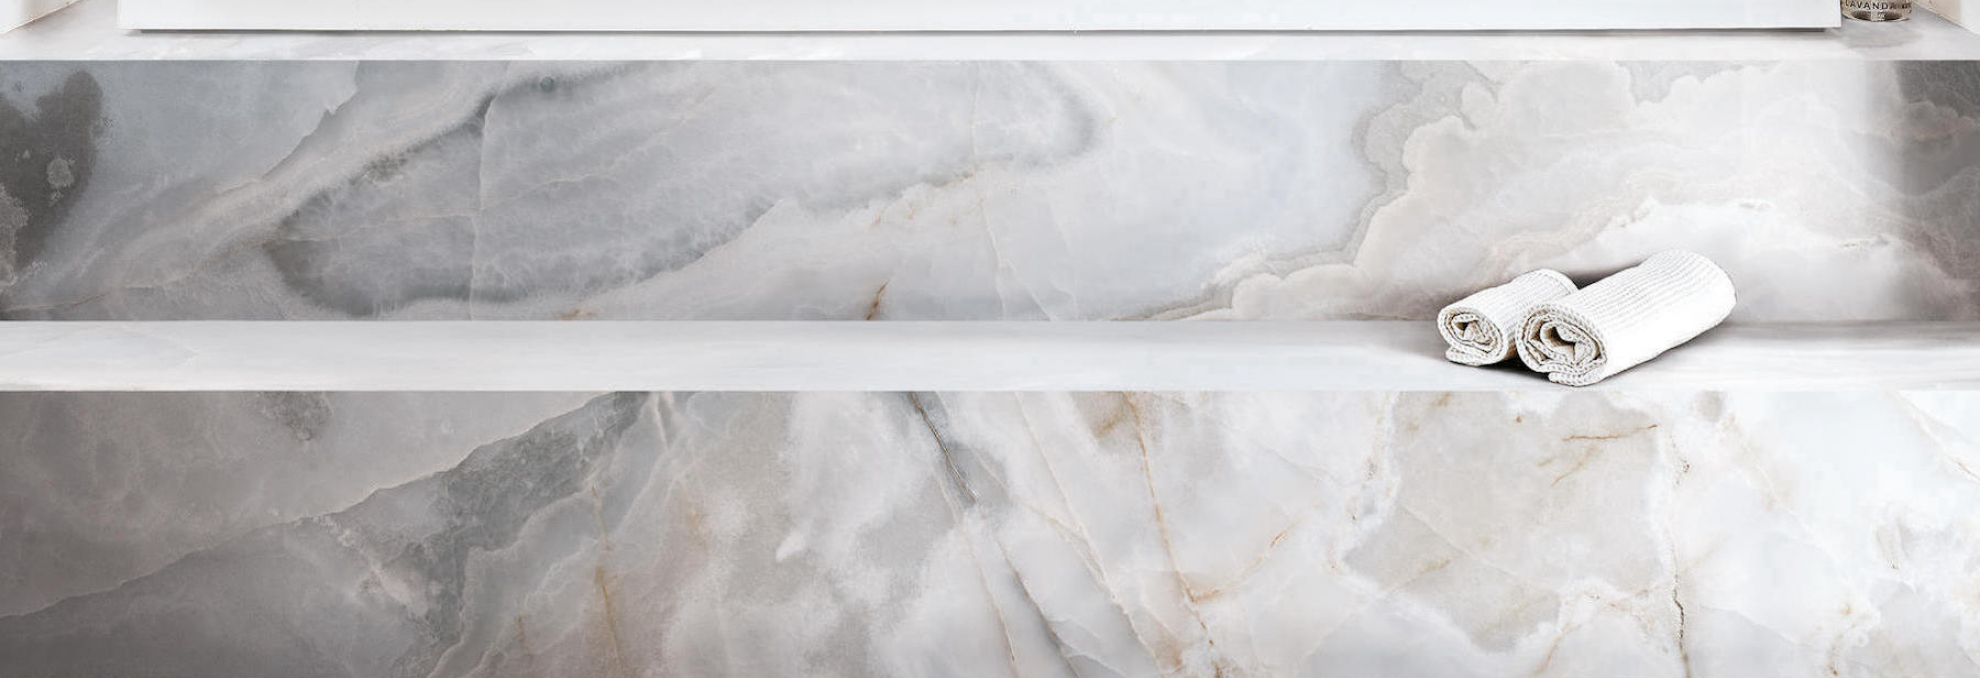 Koupelna ze série Rêves de Rex inspirovaná krásou alabastru